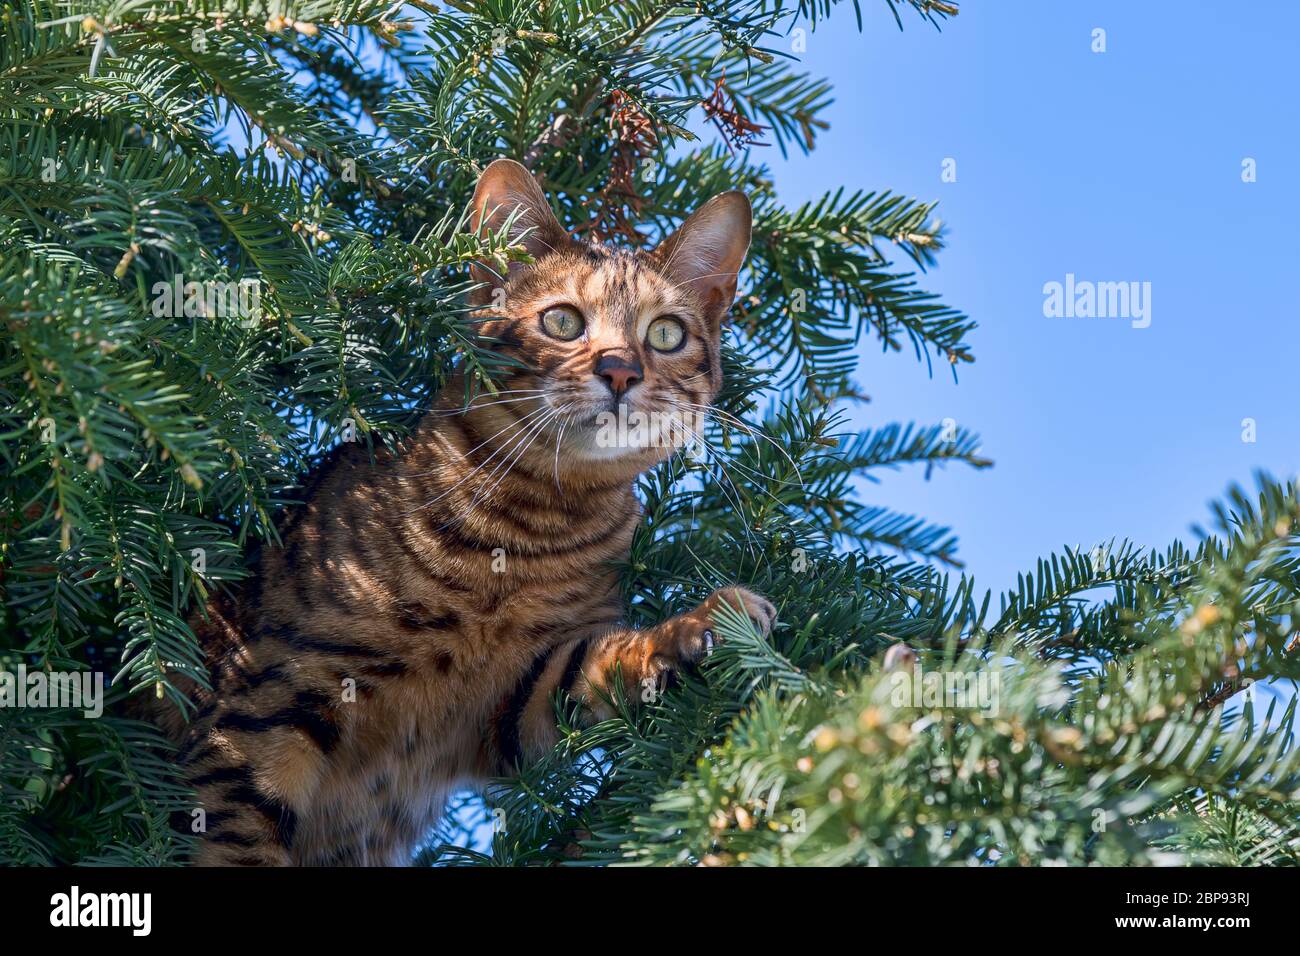 Rassekatze Toyger (Felis silvestris catus), weiblich, 8 Monate, Farbe brun tabby maquereau, braun getigert, klettert auf Nadelbaum Banque D'Images